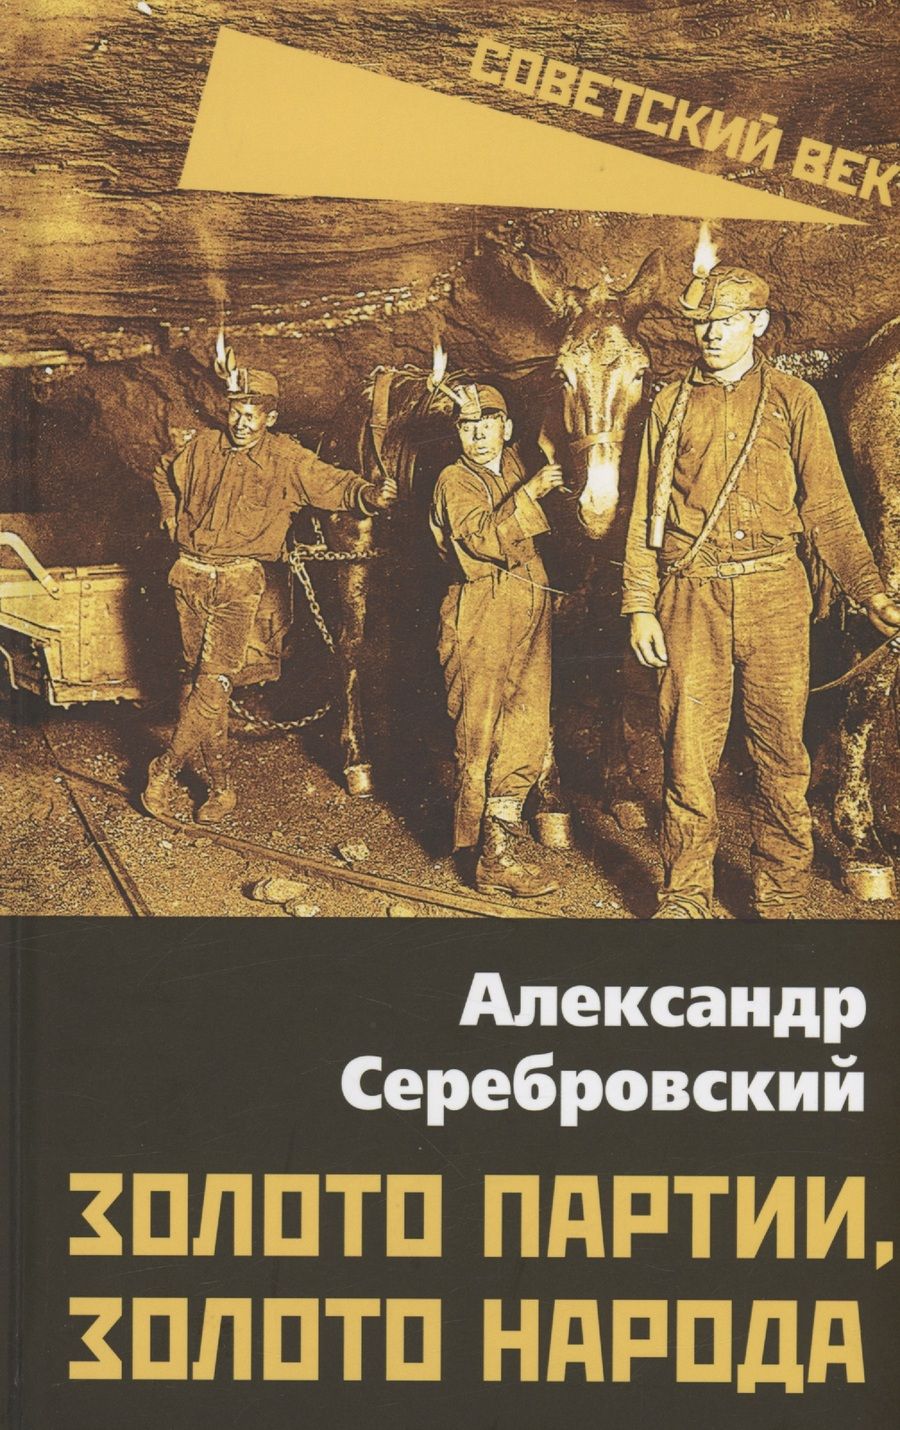 Обложка книги "Серебровский: Золото партии, золото народа"